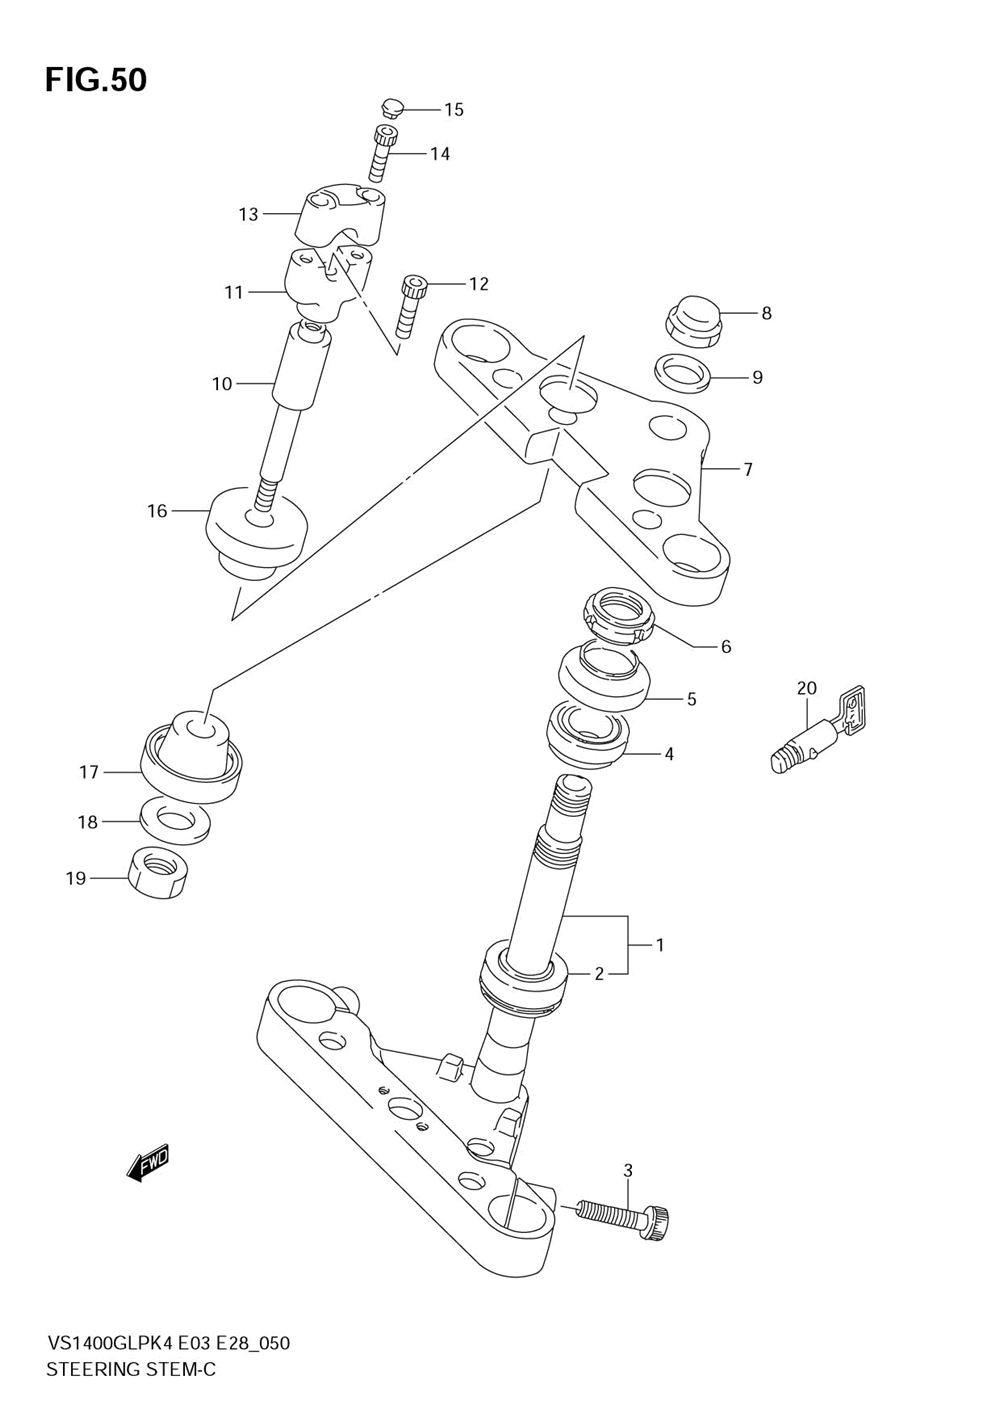 Steering stem (model k4)